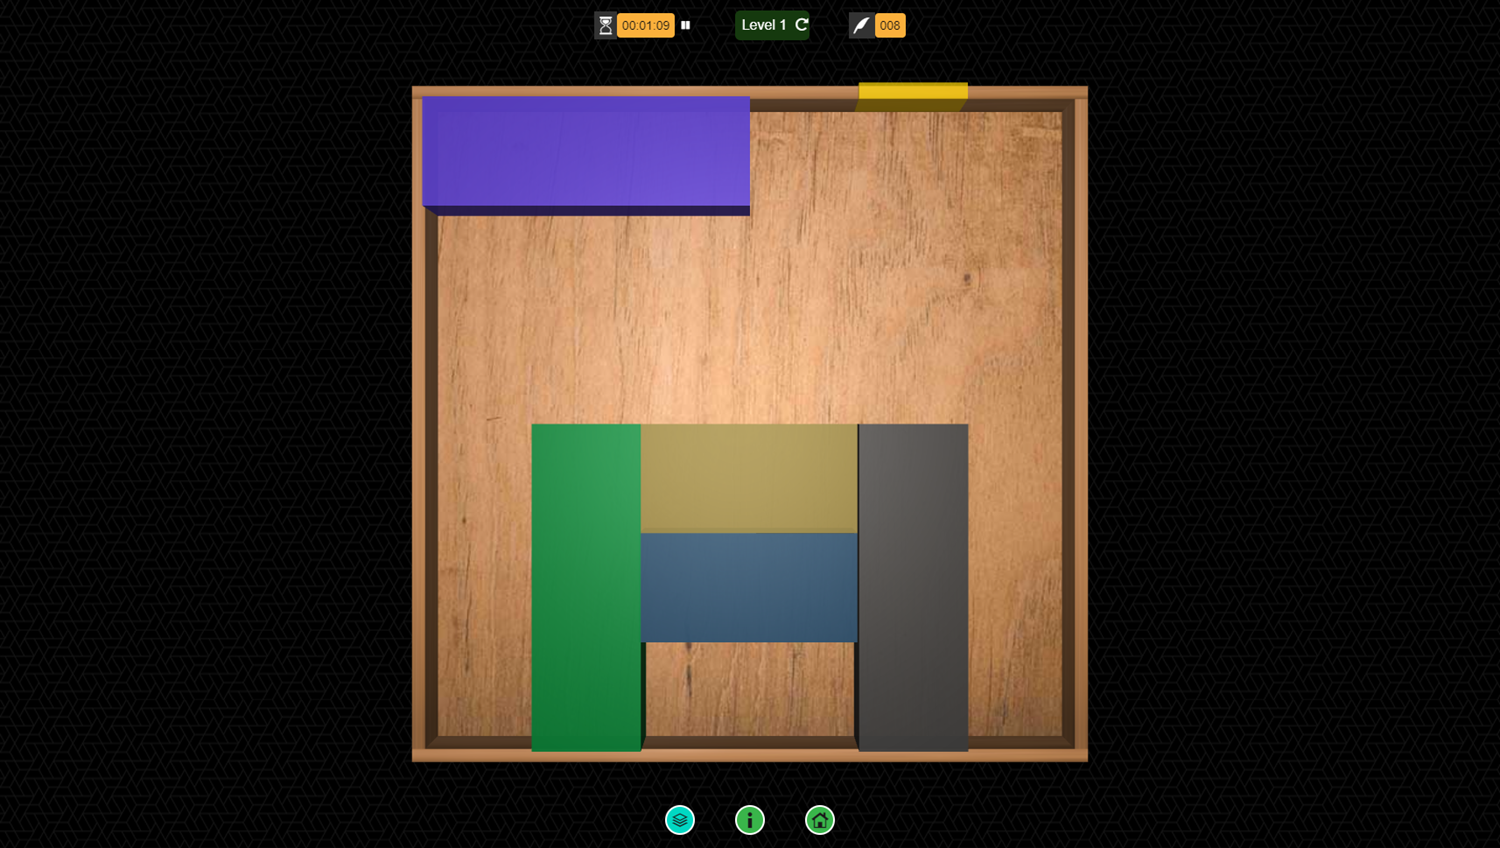 3D Block Escape Game Level Play Screenshot.